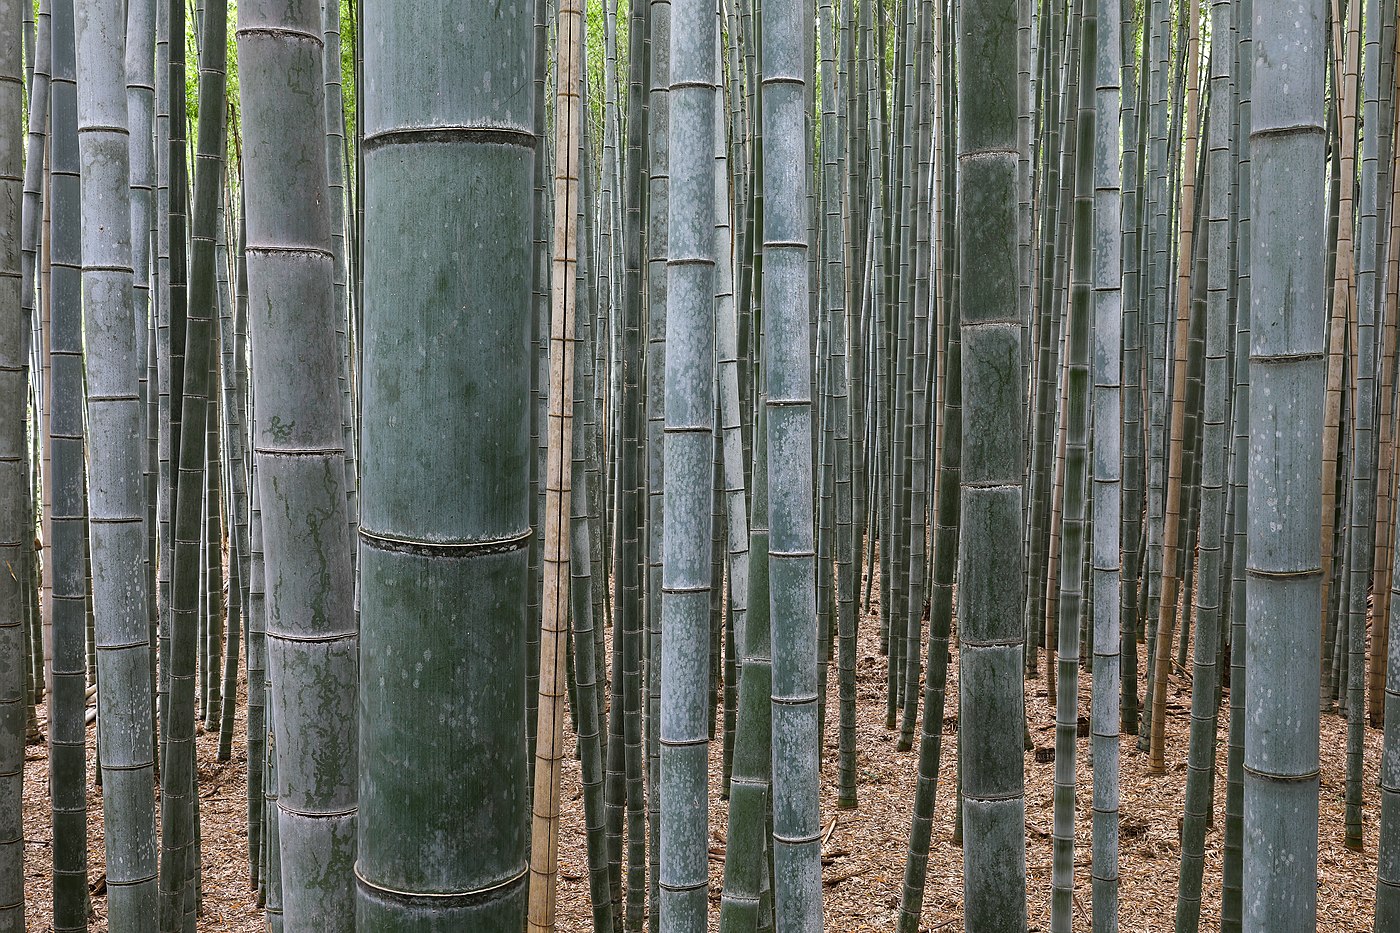 Bamboo Forest, Arashiyama, Kyoto, Japan.